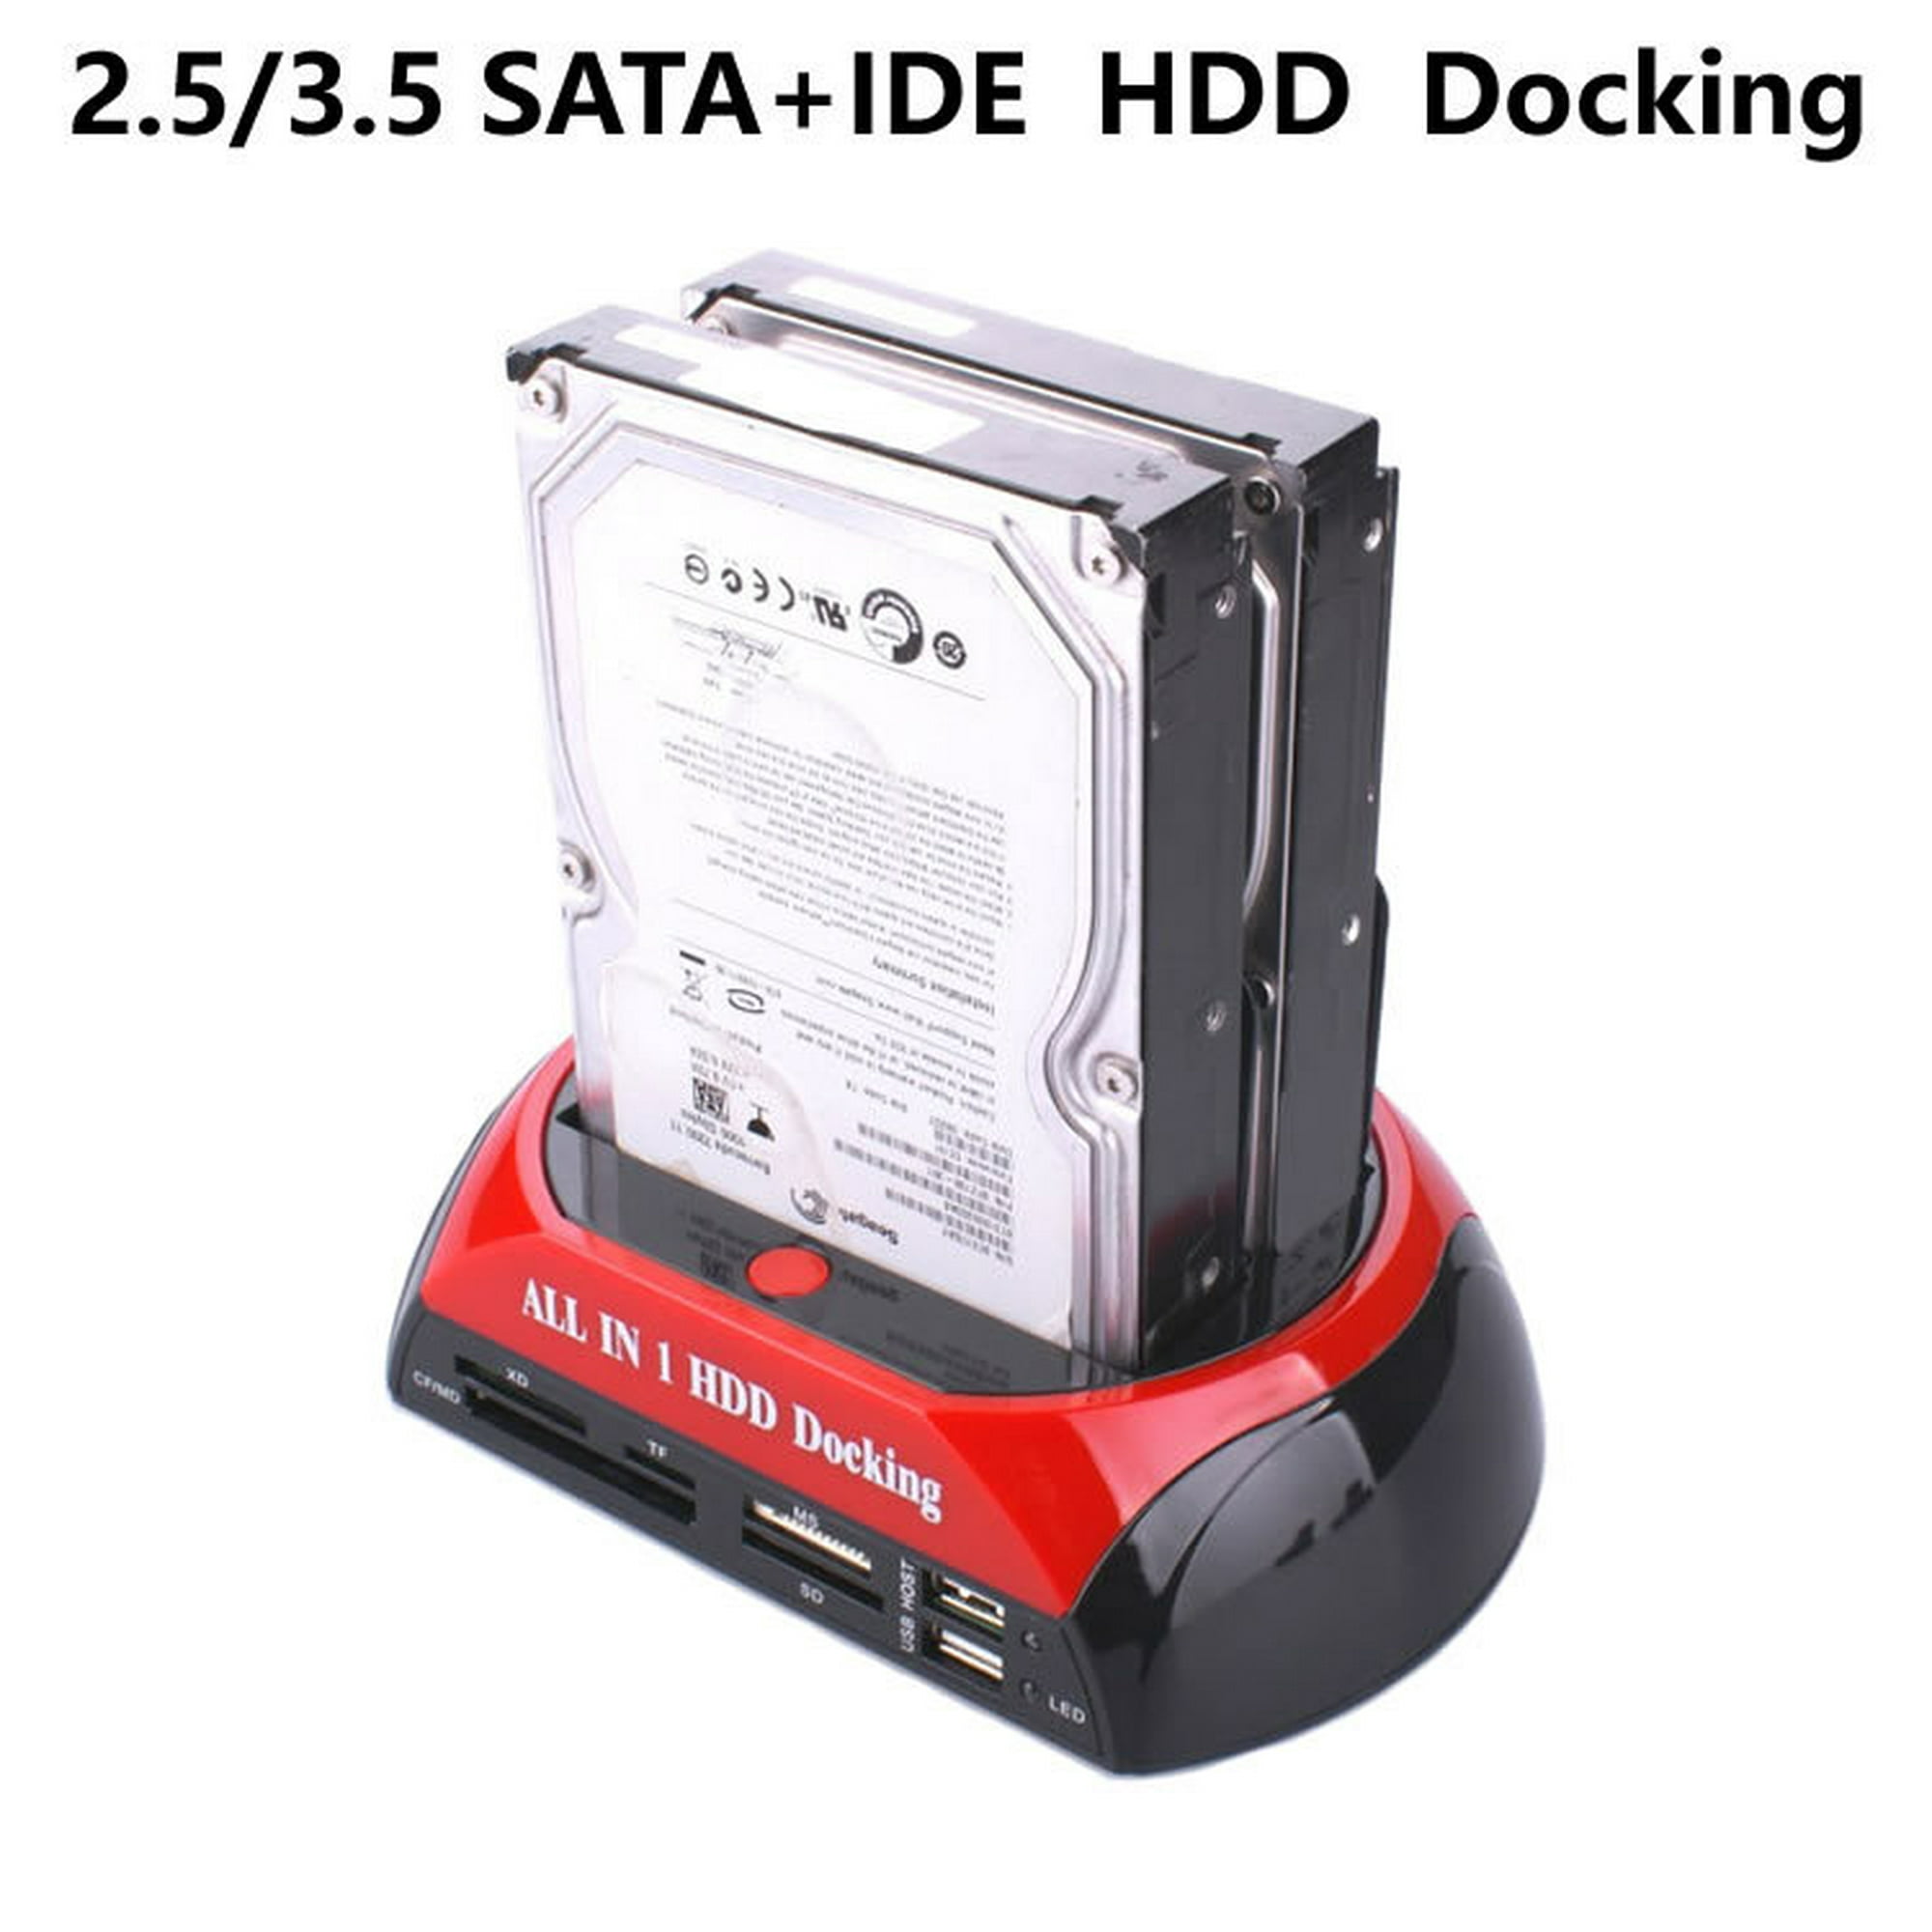 Ide Sata Dual All In 1 Hdd Dock Docking Station Unidad de disco duro Hdd 3.5 Lector 2.0 Us C WD.WDQZL Walmart en línea